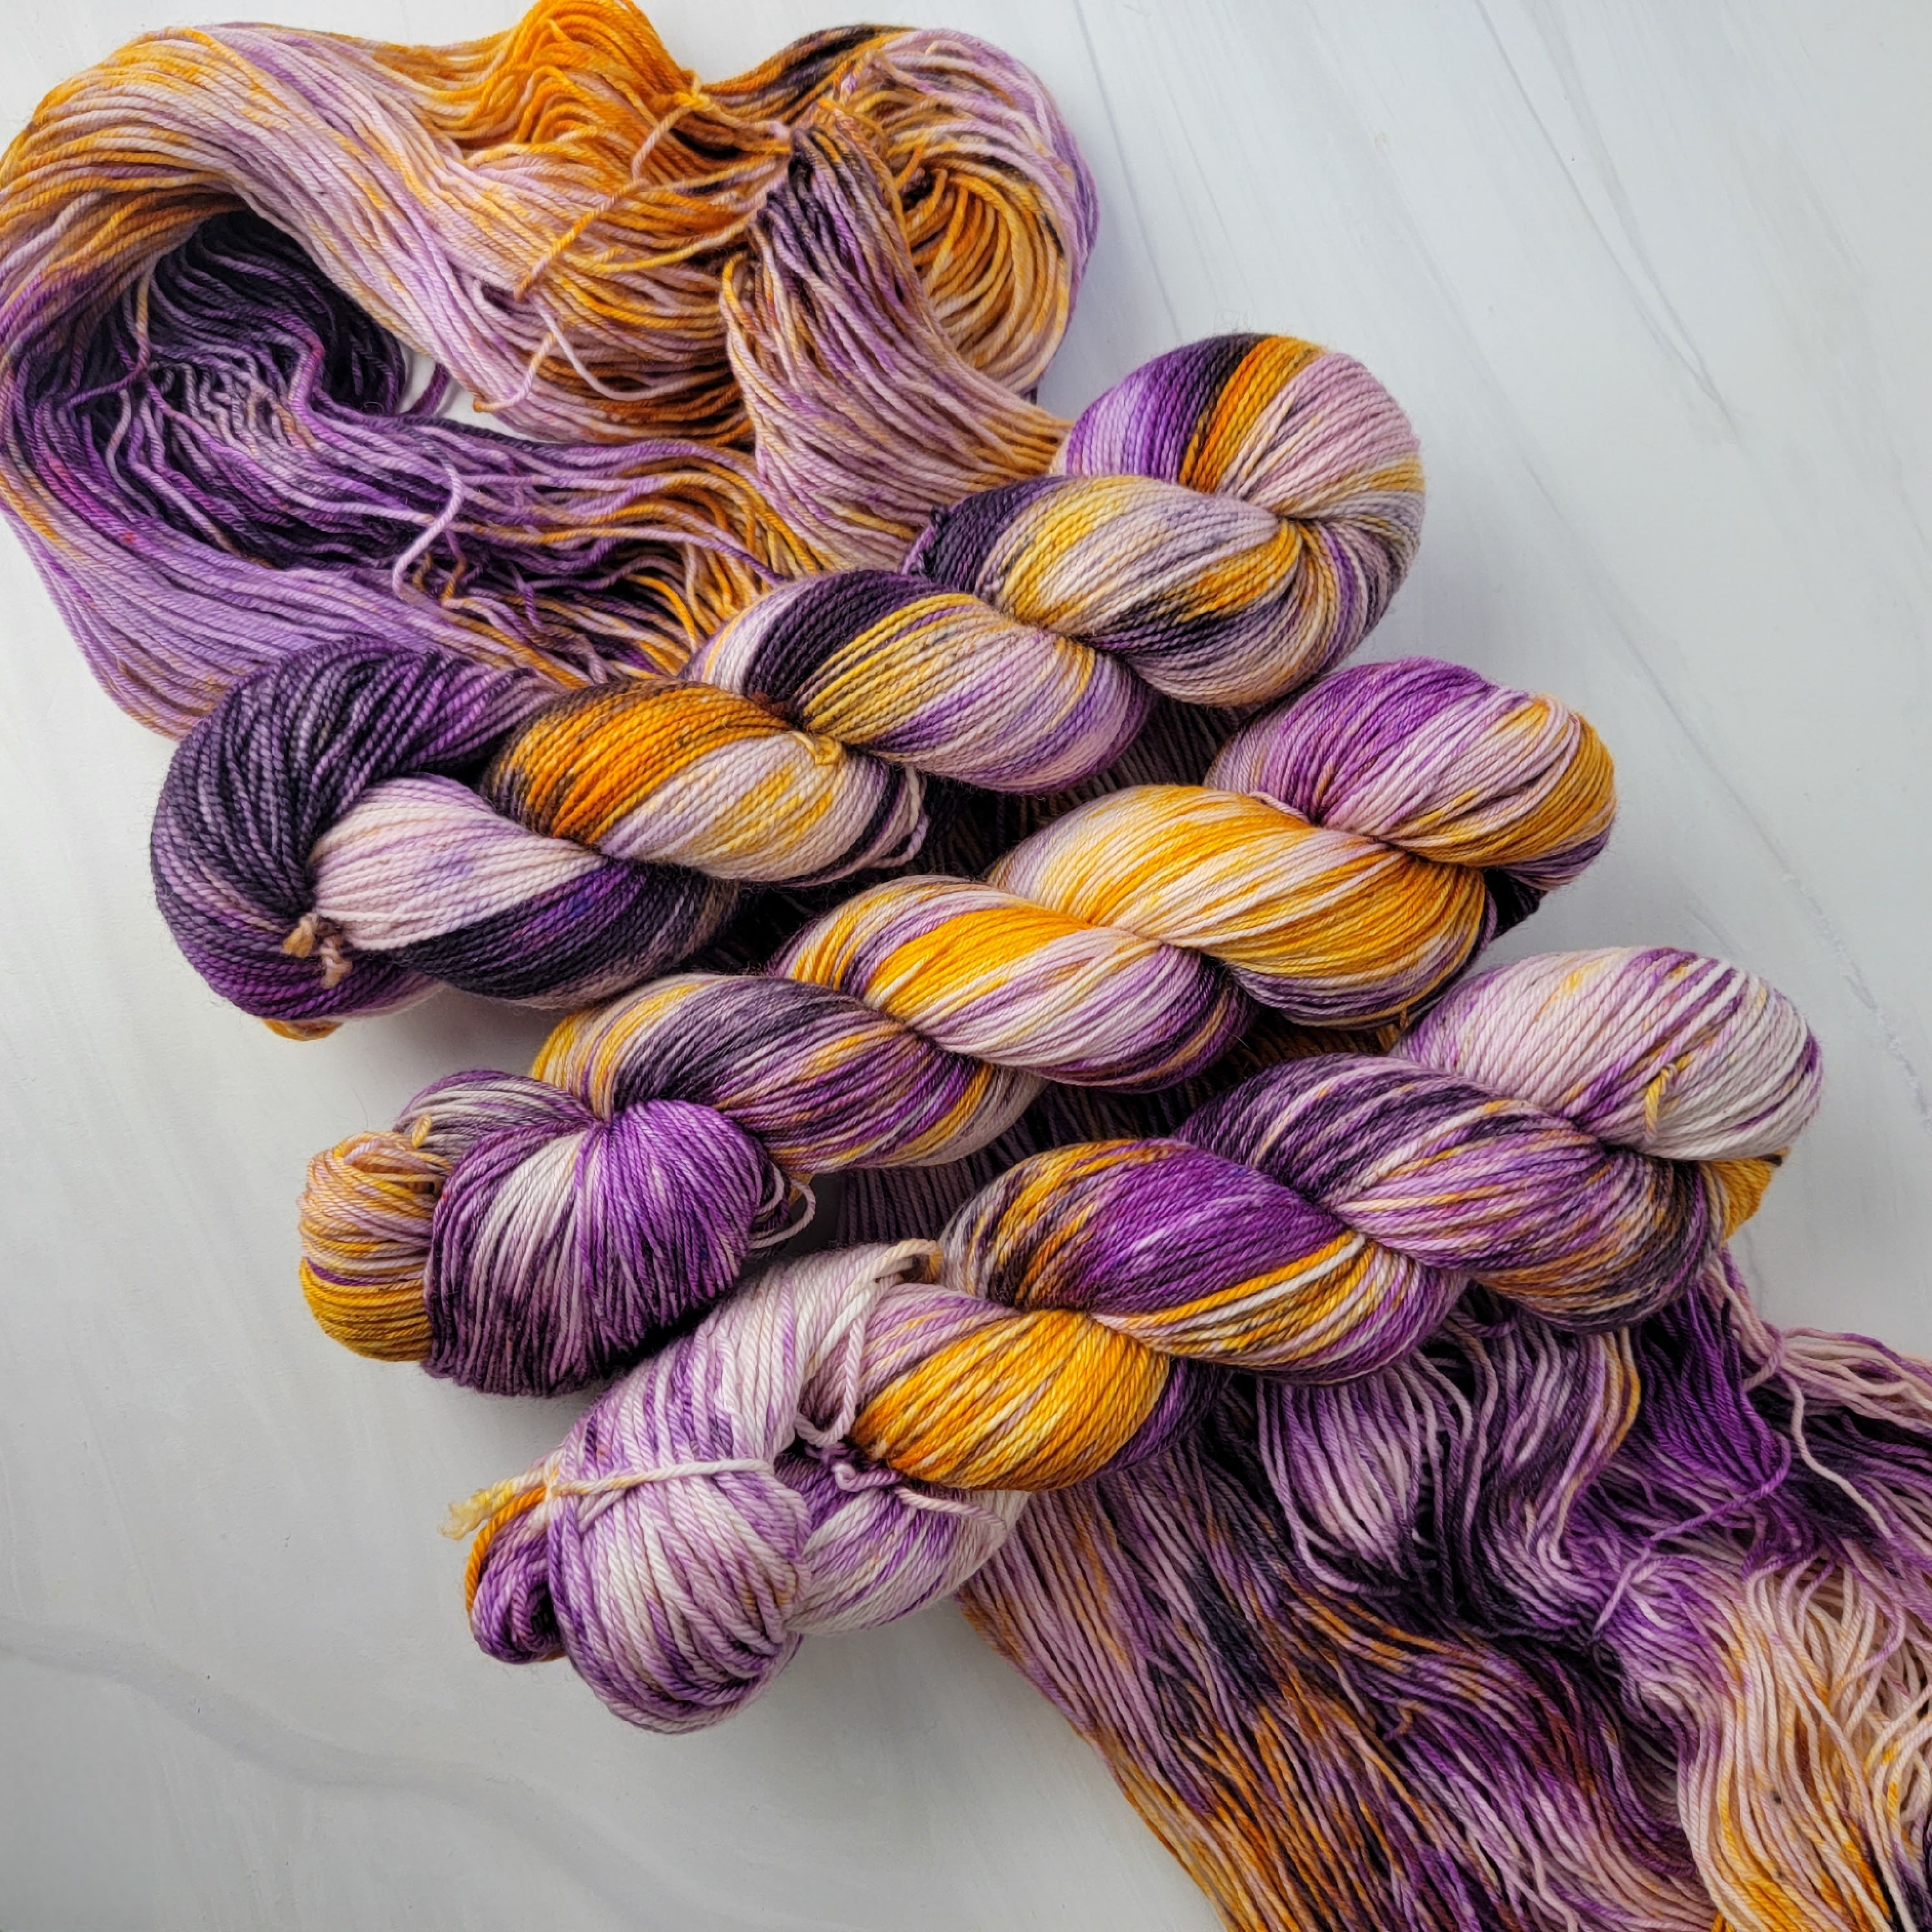 SALE lot - Ready to ship yarn - SW Merino DK weight yarn - 100g each